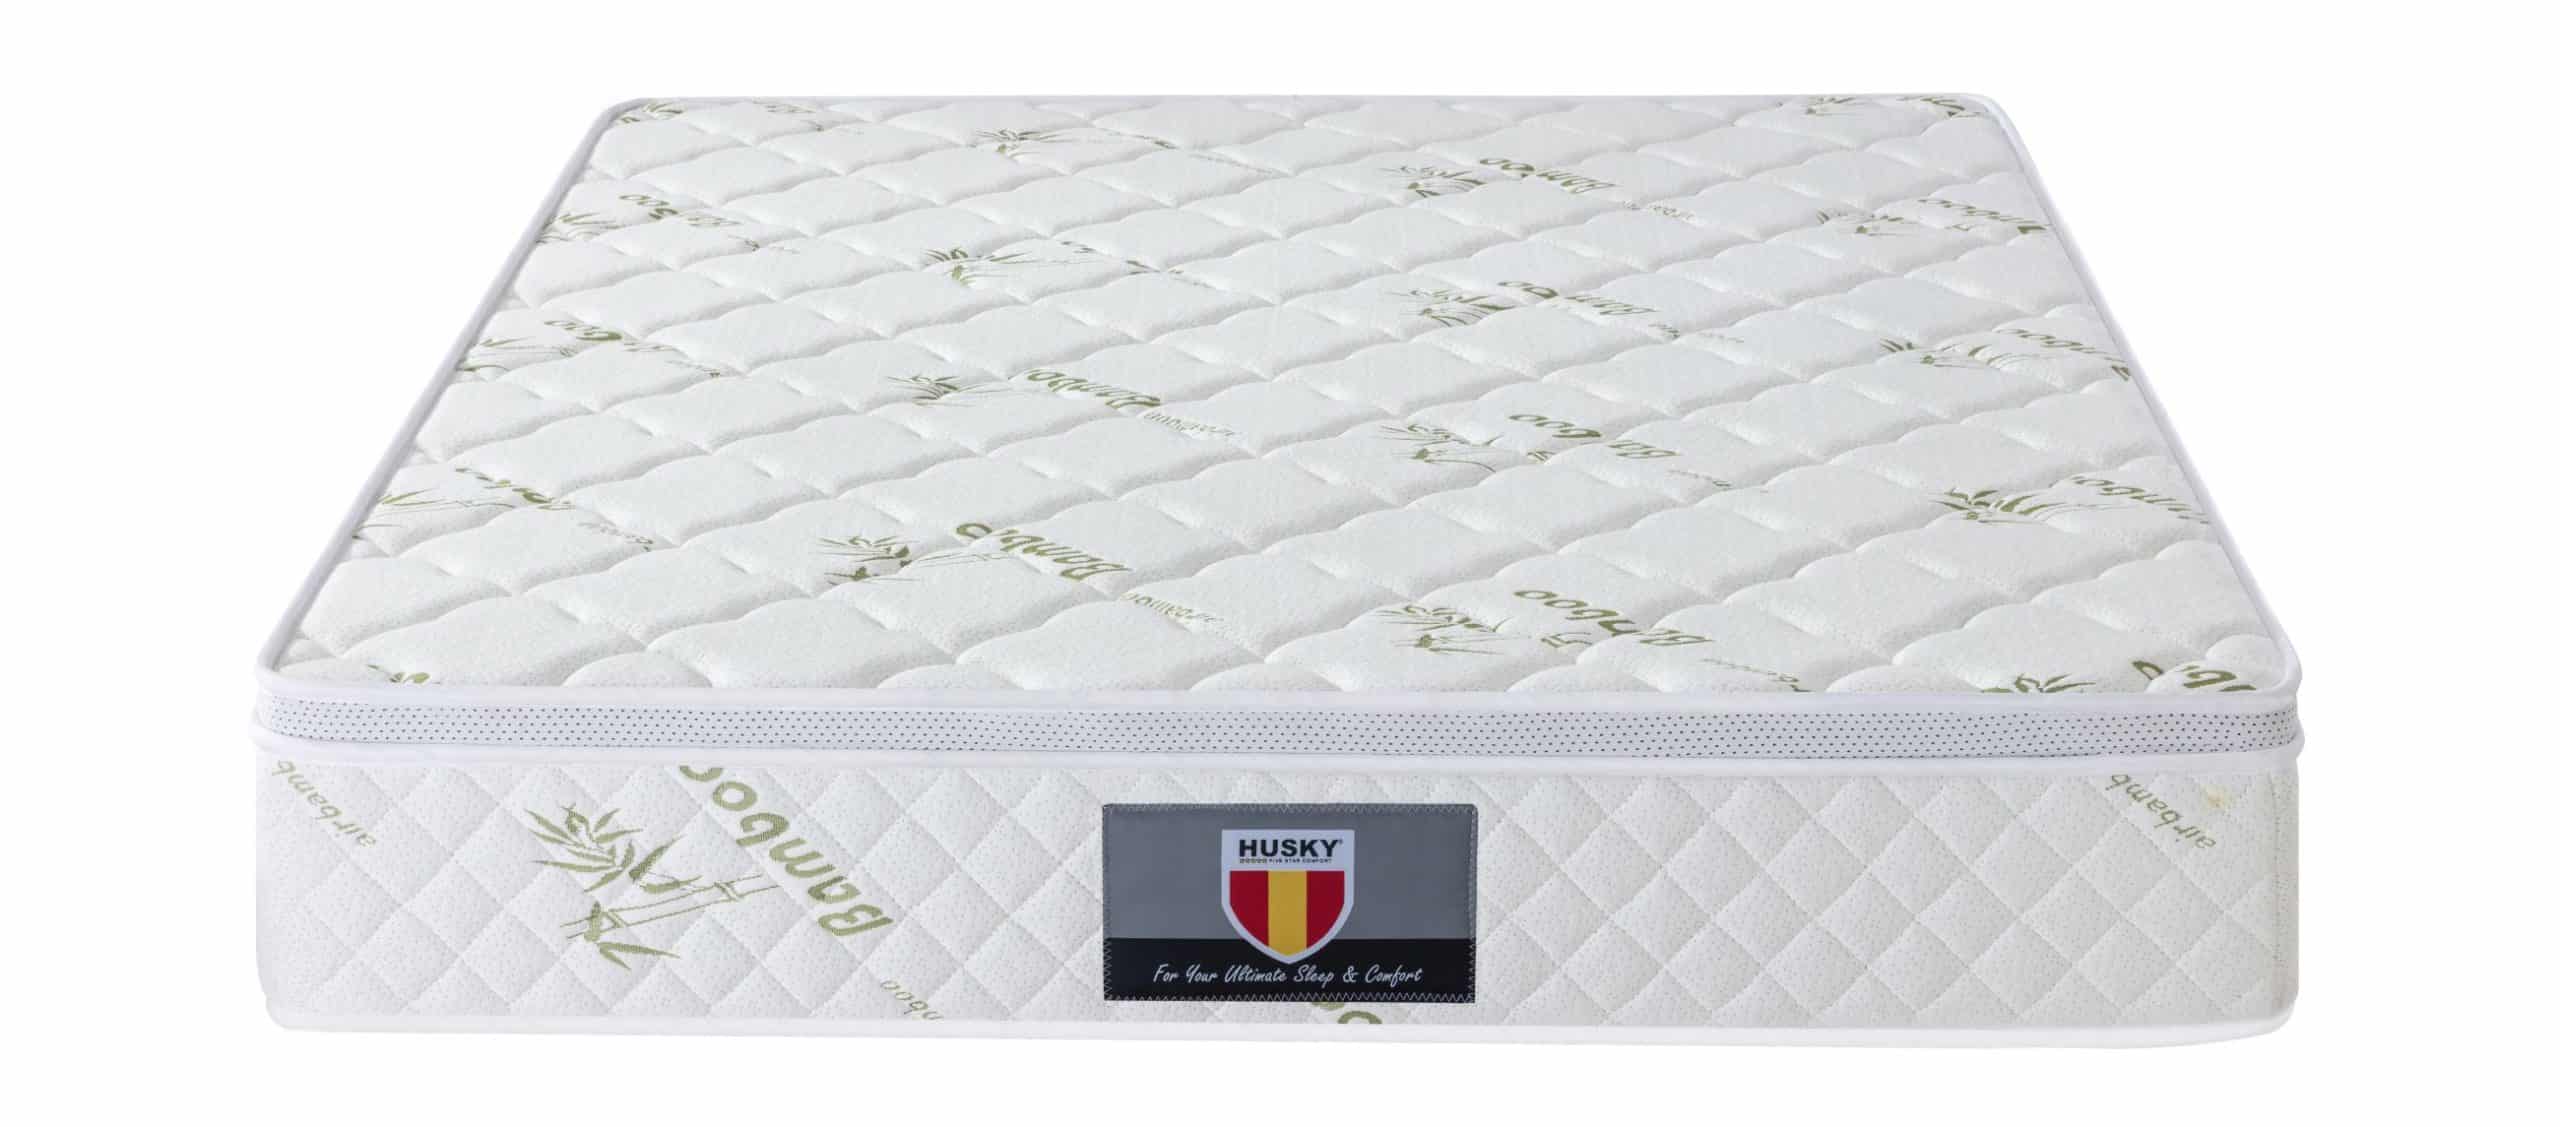 4 Kingdom Husky furniture and mattress five star comfort Pockect coil Bambo Cover euro Pillow top mattress 3